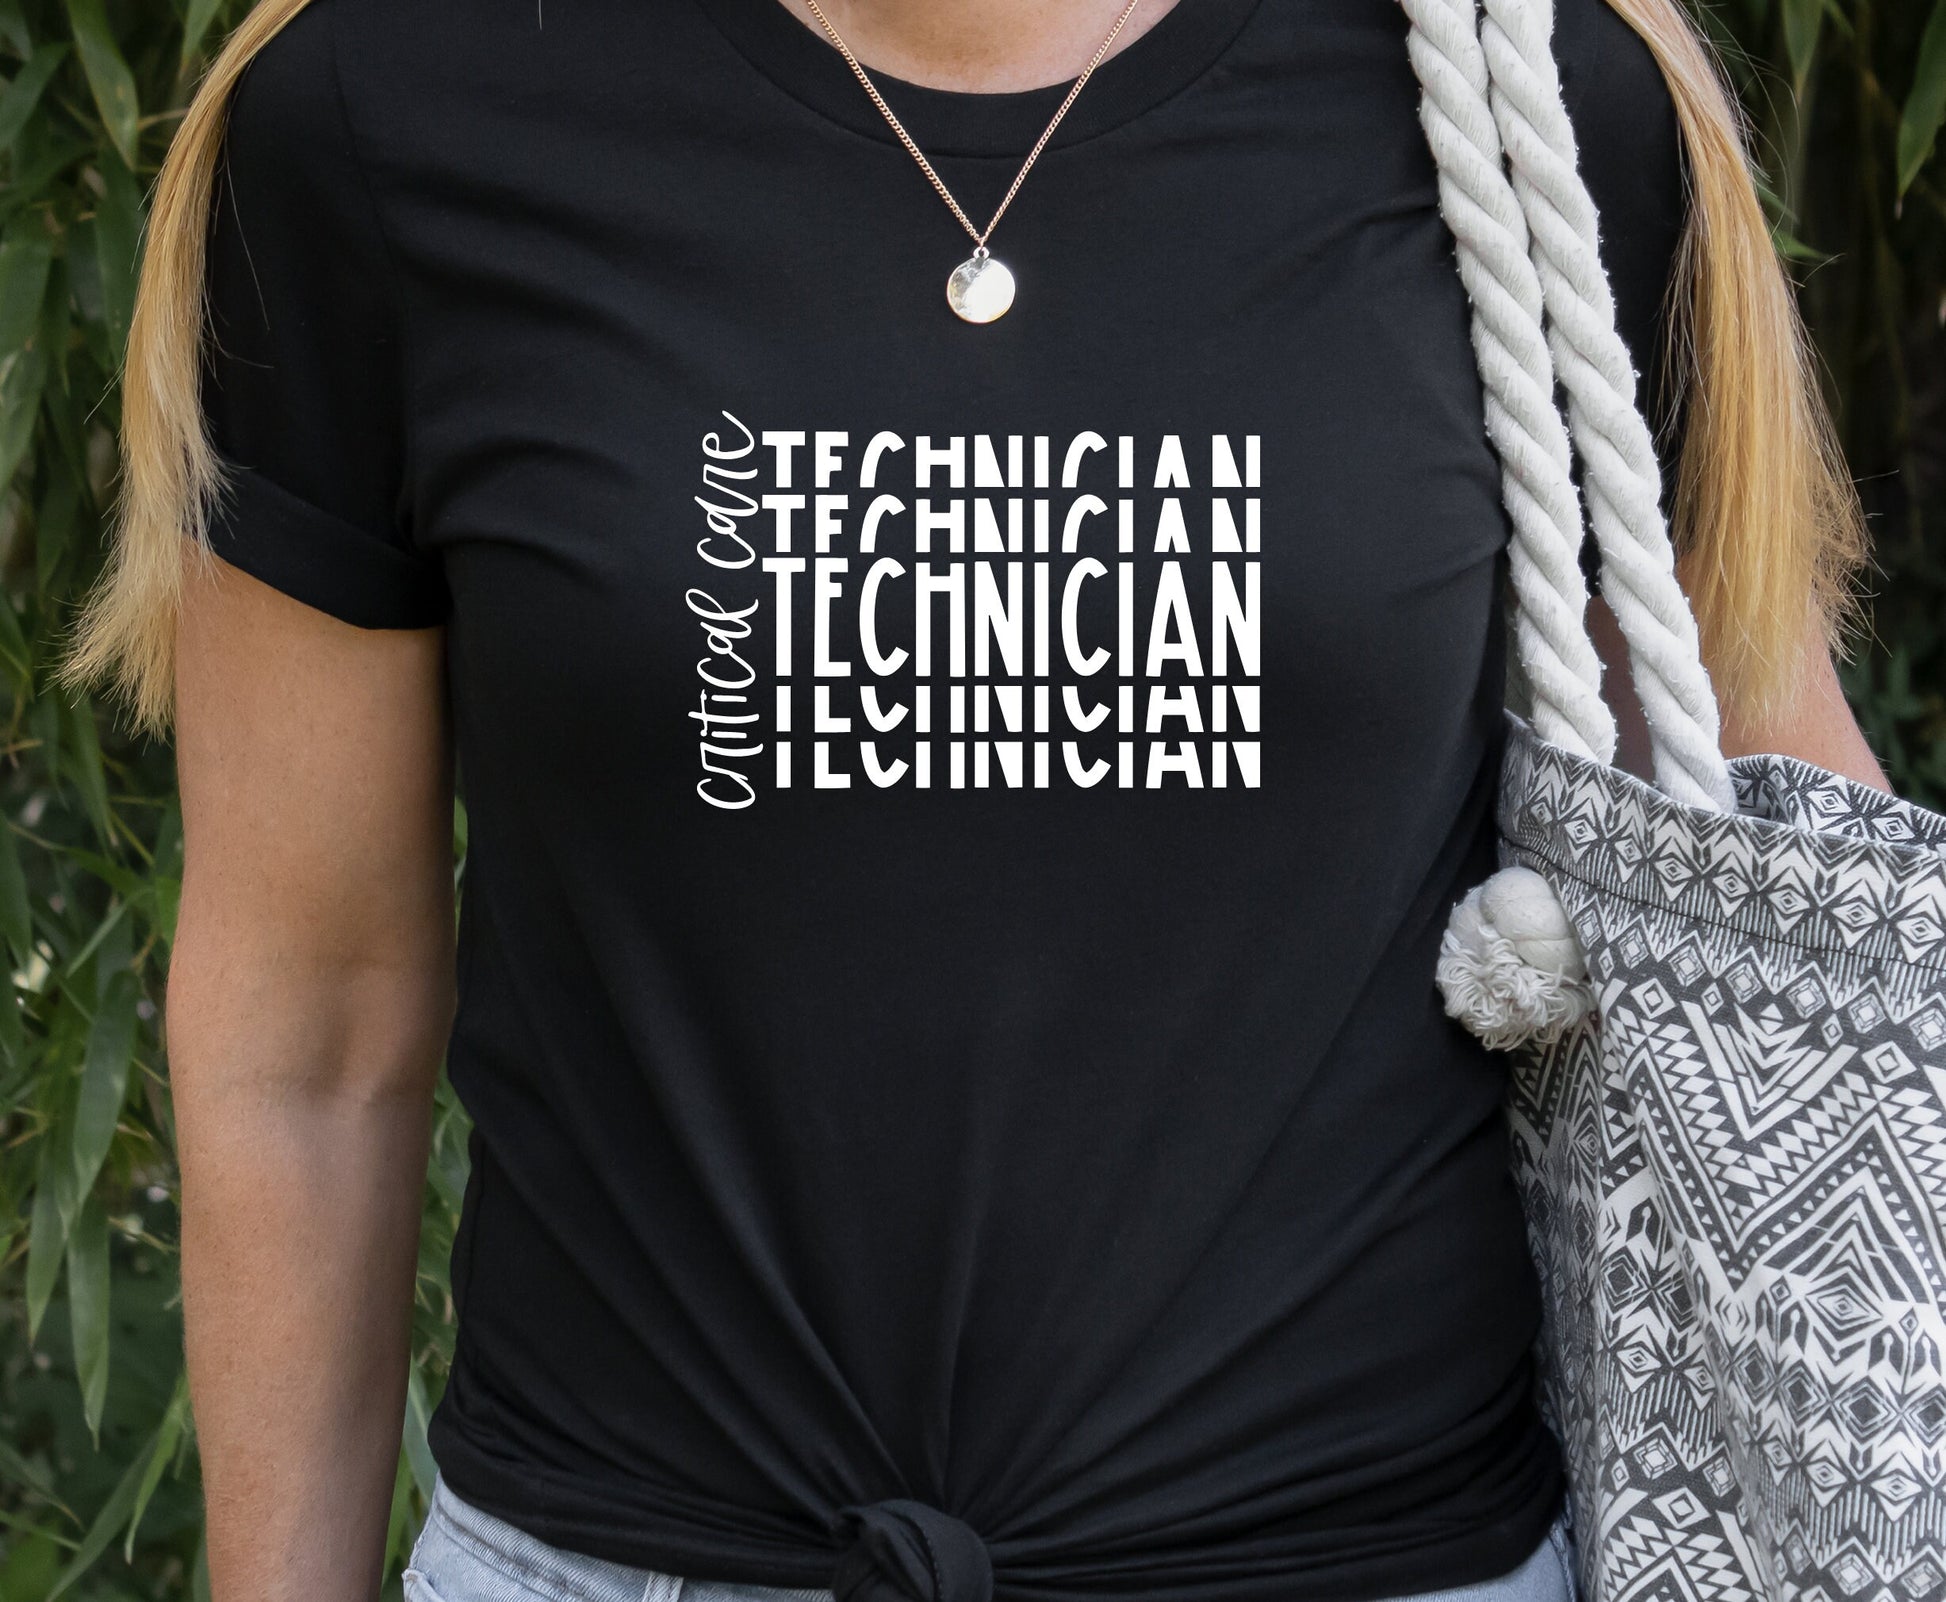 critical care tech shirt, cna shirt, icu tech shirt, er tech shirt, certified nurse shirt, cct shirt, critical care technician gifts